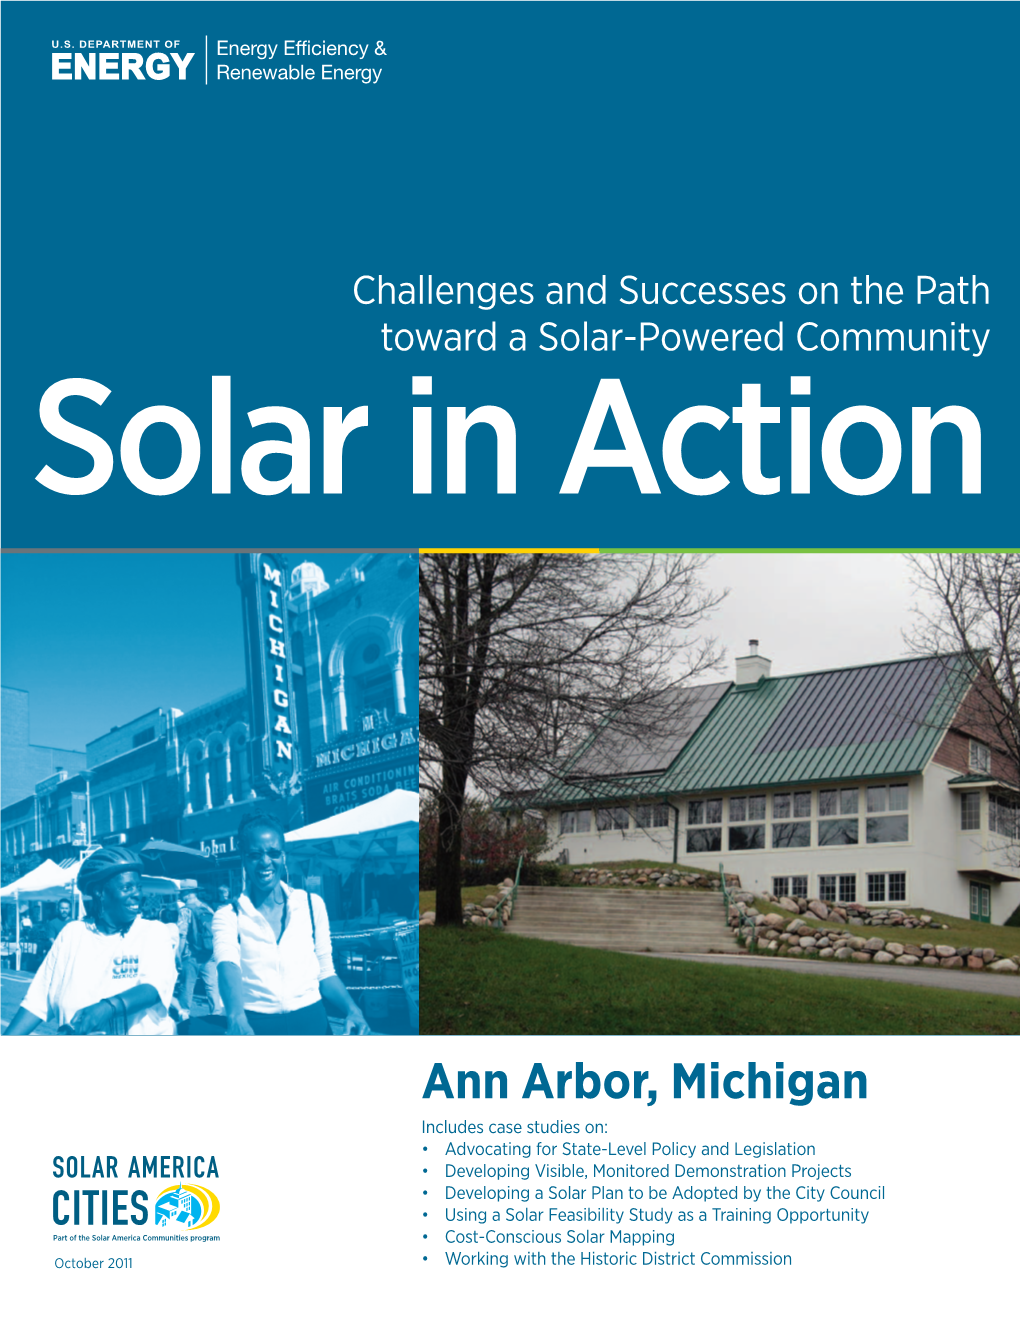 Ann Arbor, Michigan: Solar in Action